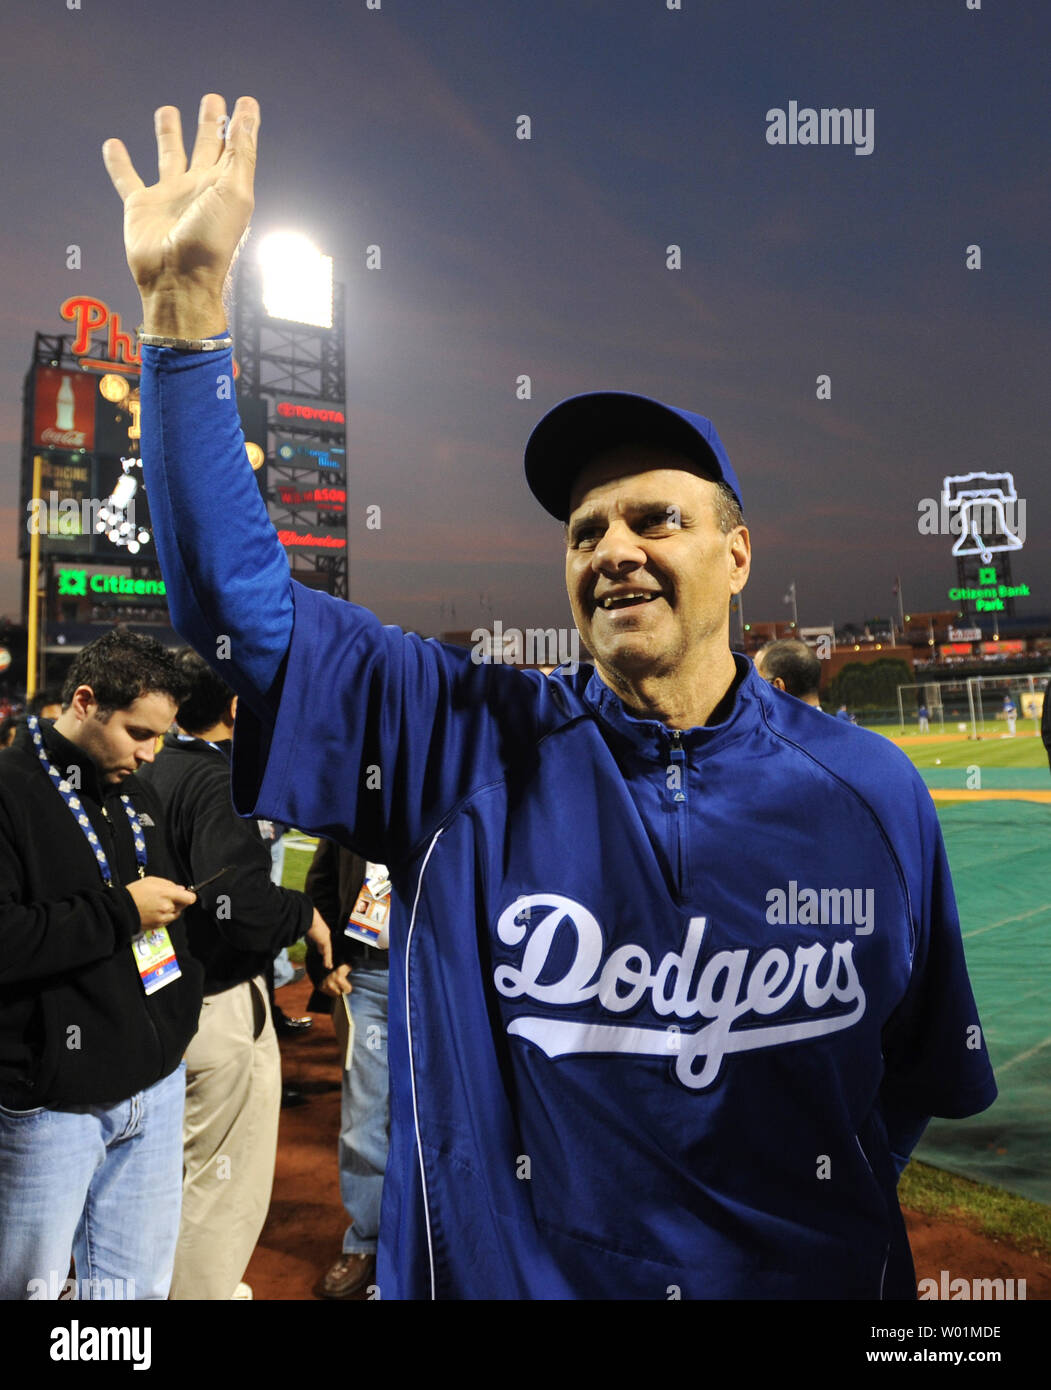 Dodgers' title is legitimate despite shortened season — The Downey Patriot